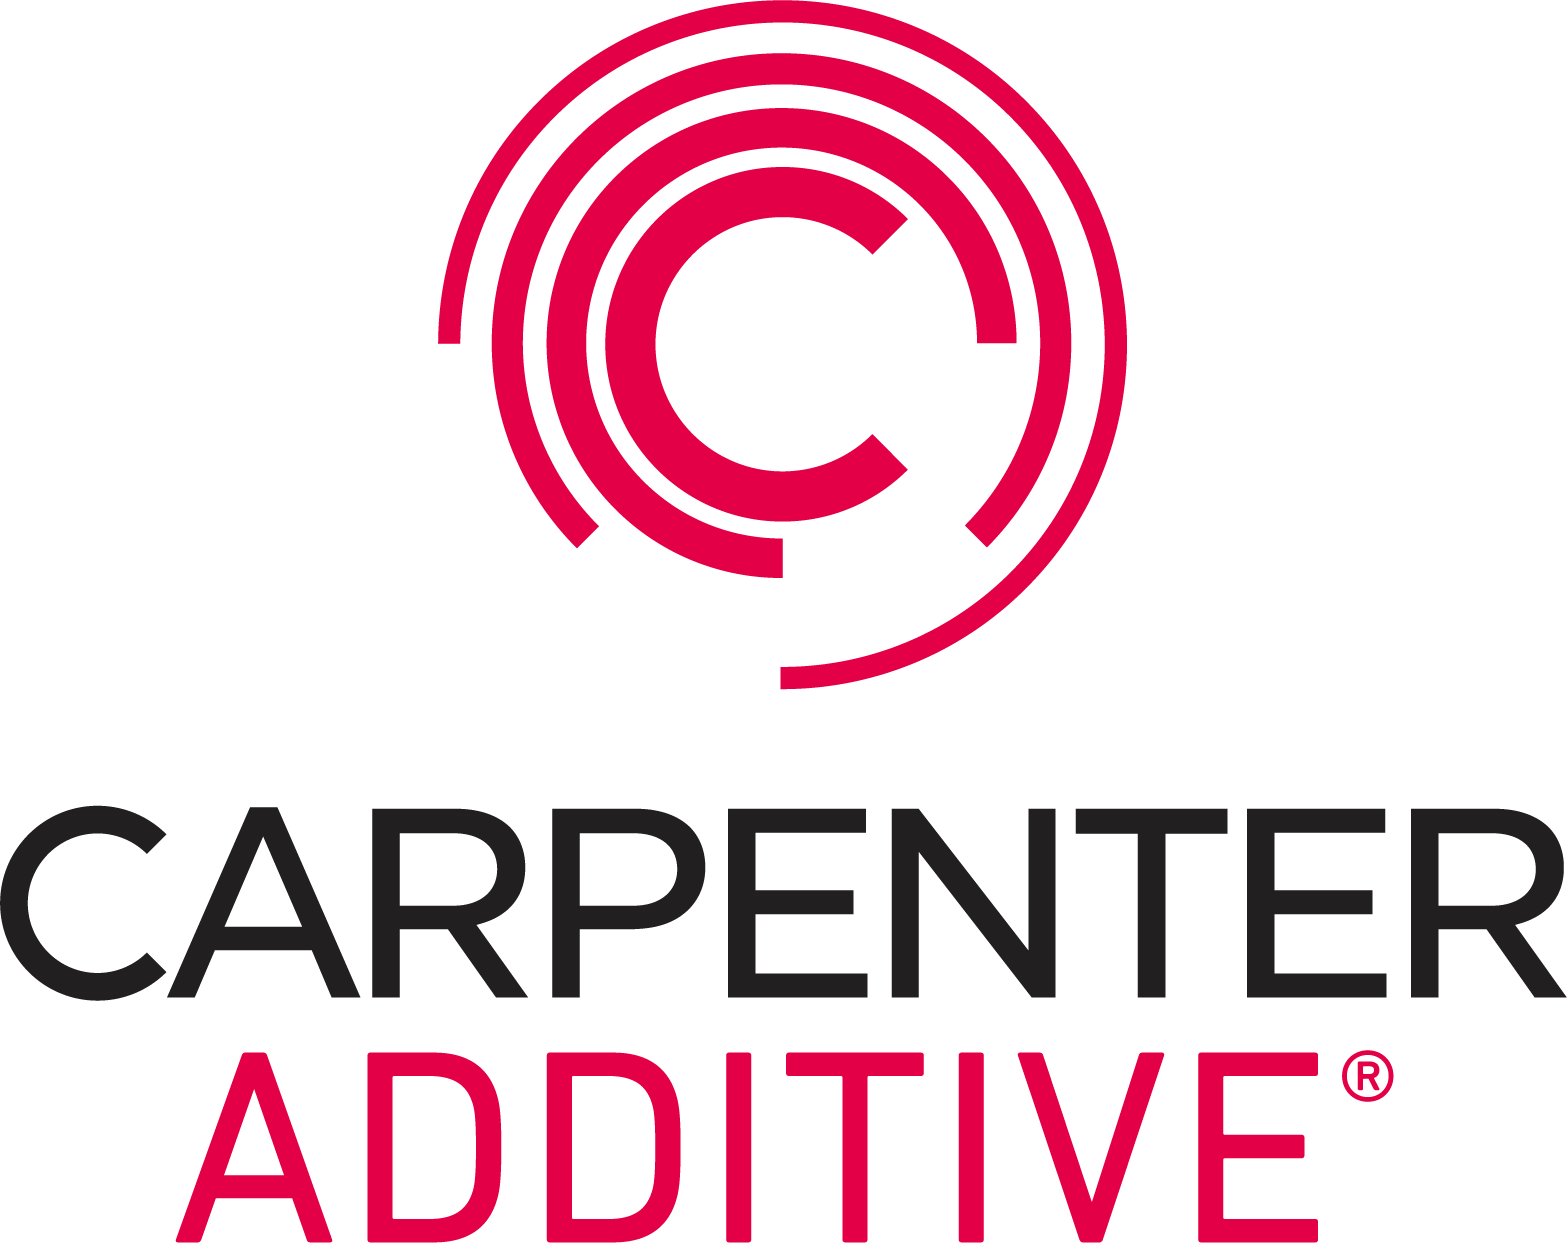 Carpenter_Additive_Stacked